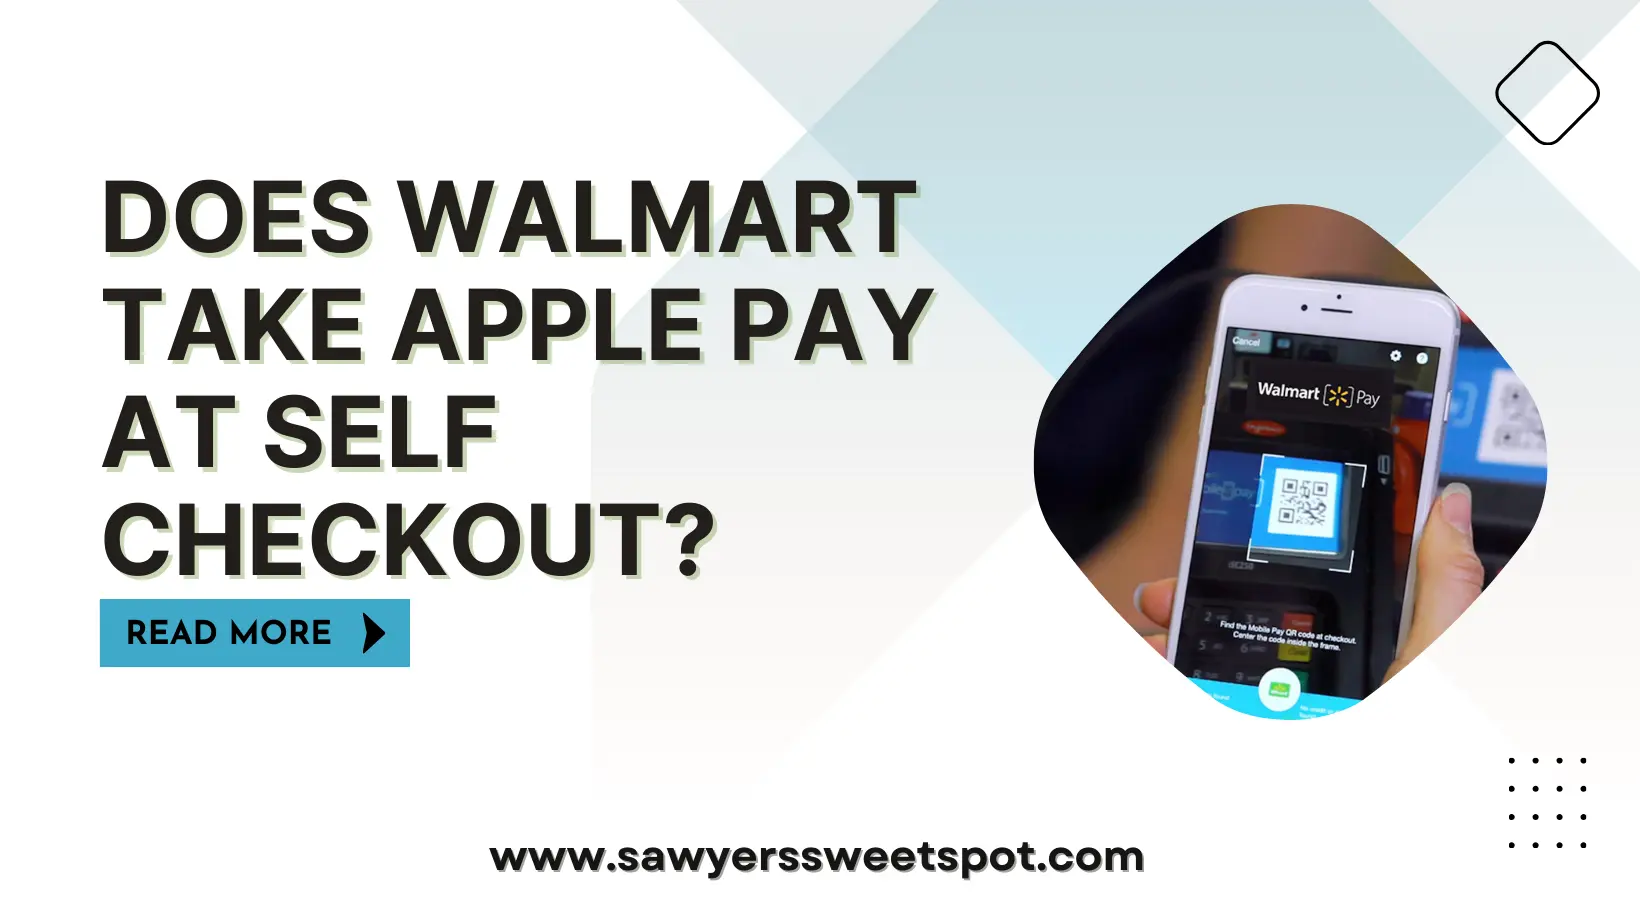 Does Walmart Take Apple Pay at Self Checkout?